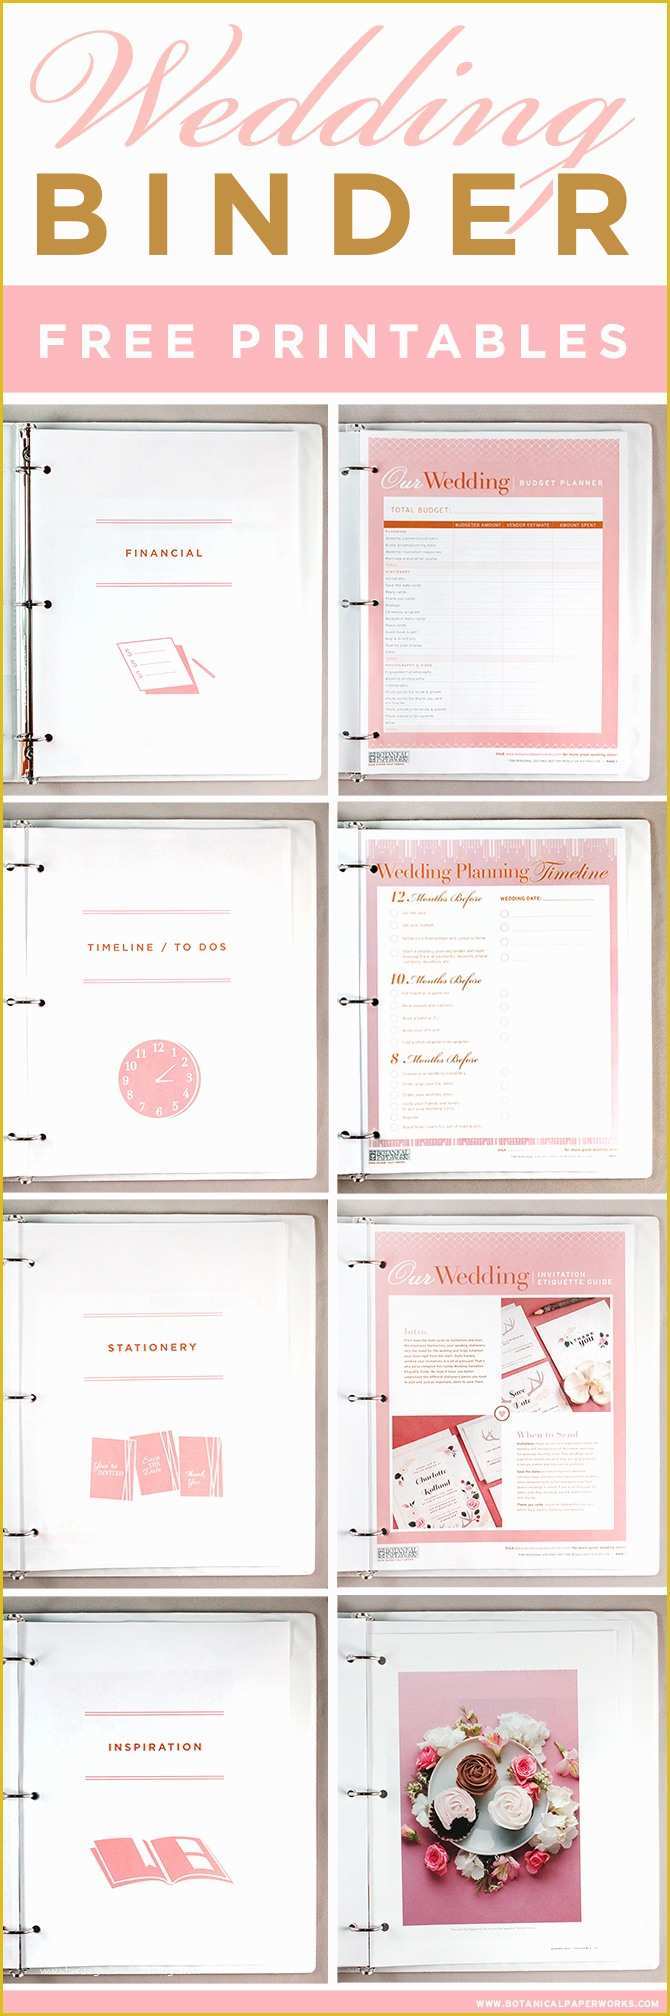 Free Printable Wedding Binder Templates Of Free Printables Wedding Planning Binder